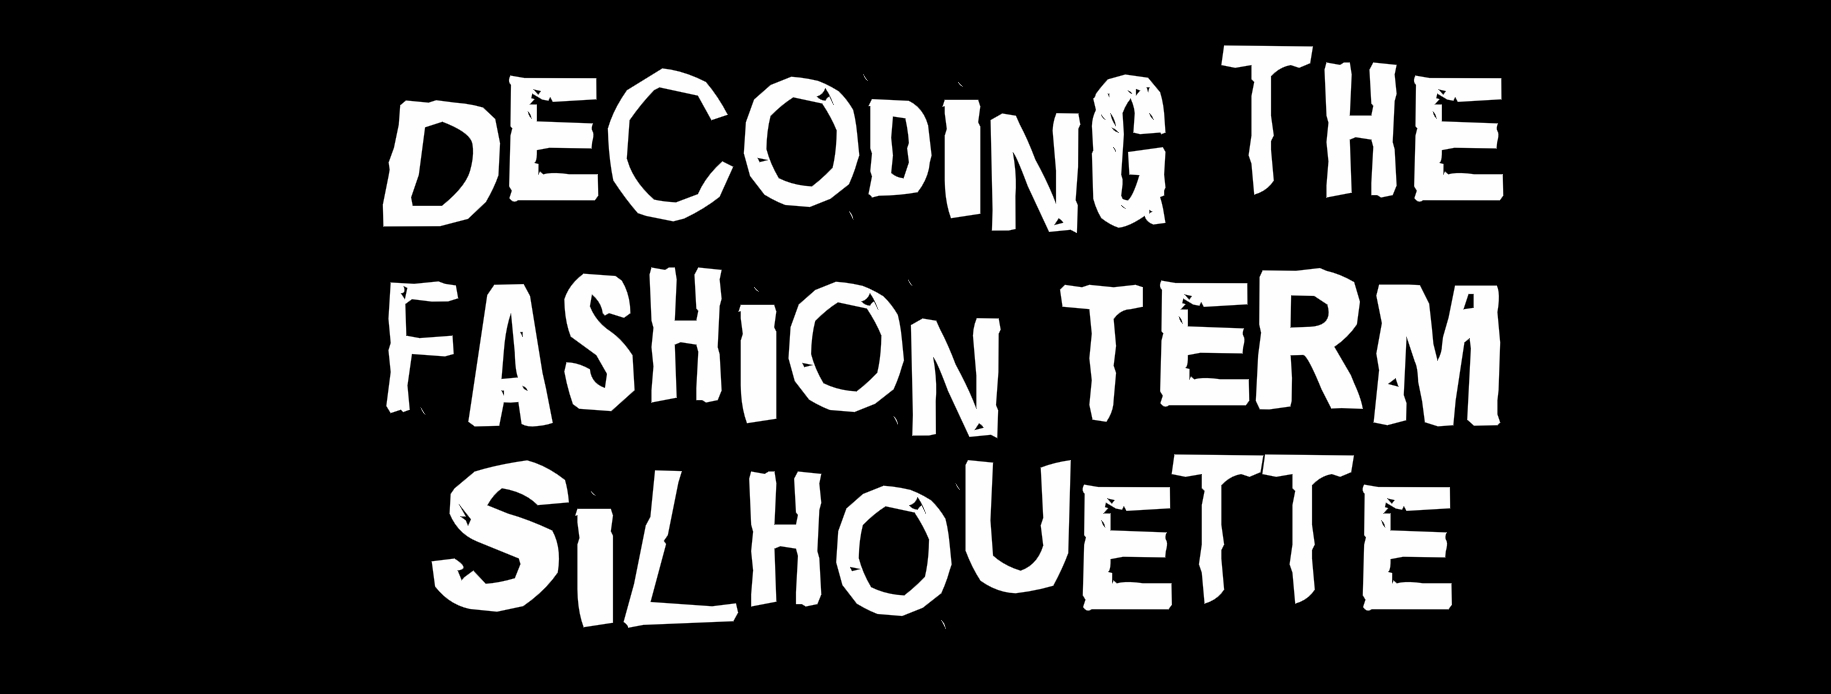 Decoding The Fashion Term Silhouette